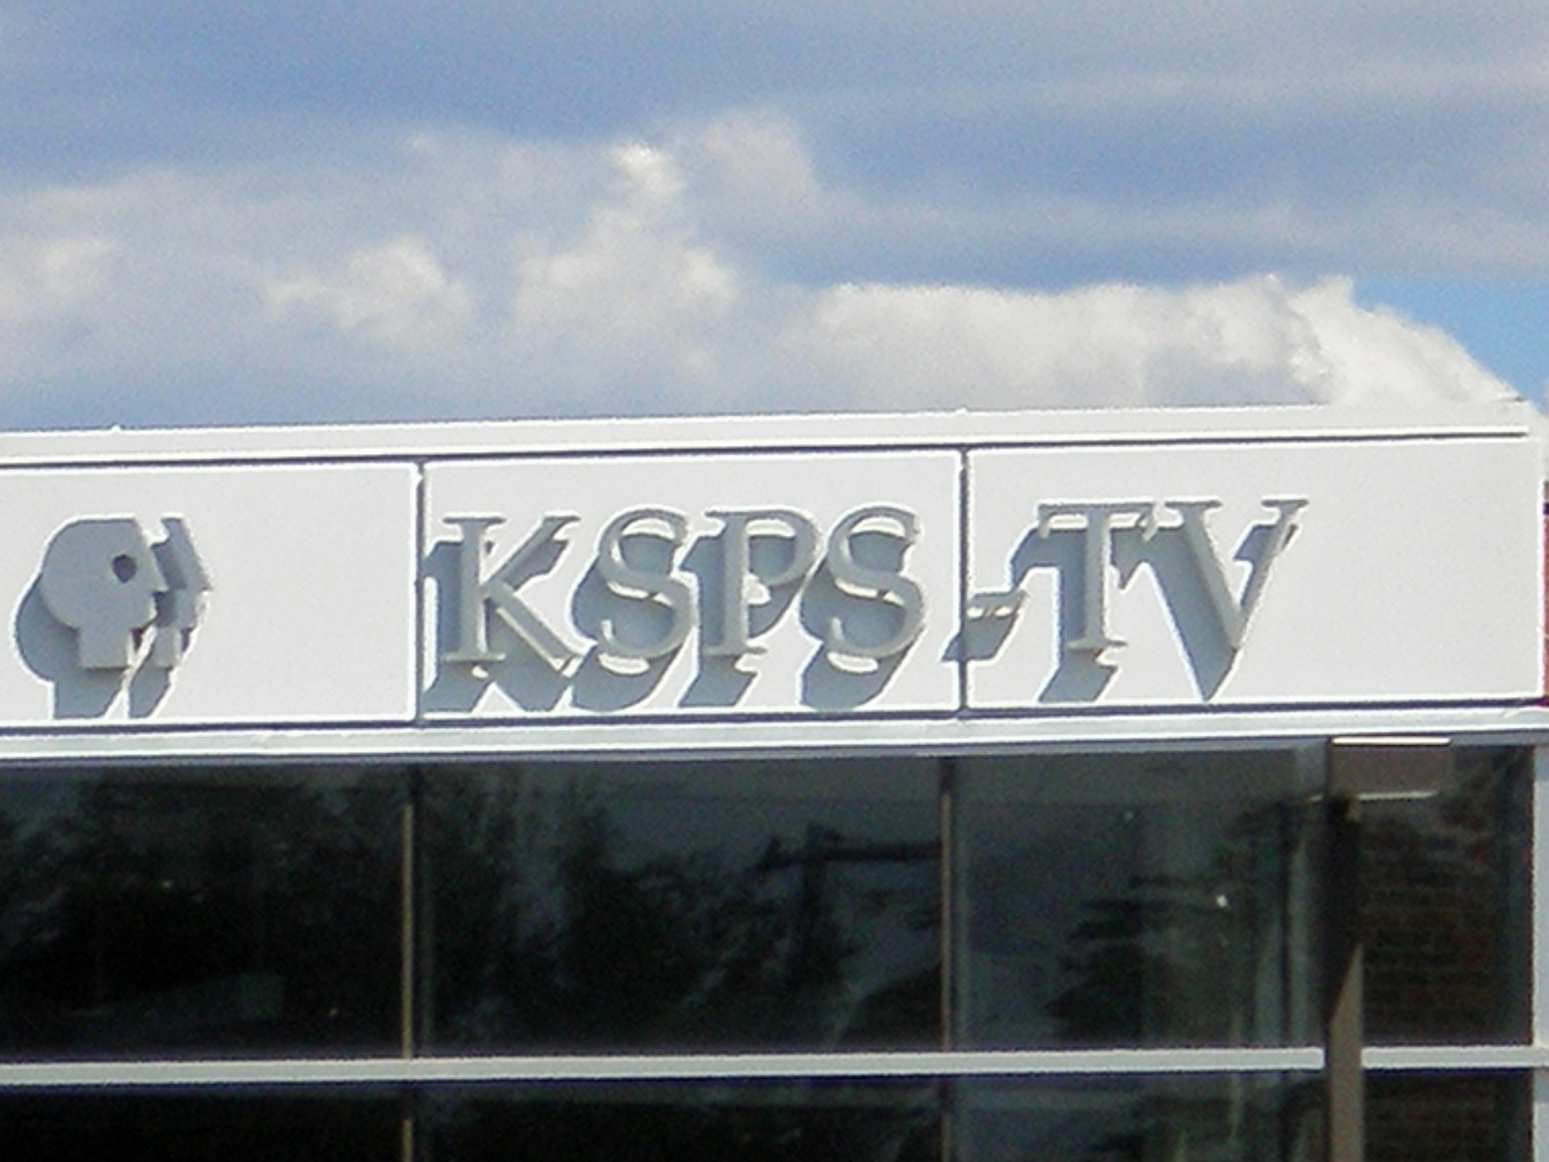 KSPS TV Channel 7 Spokane, Washington